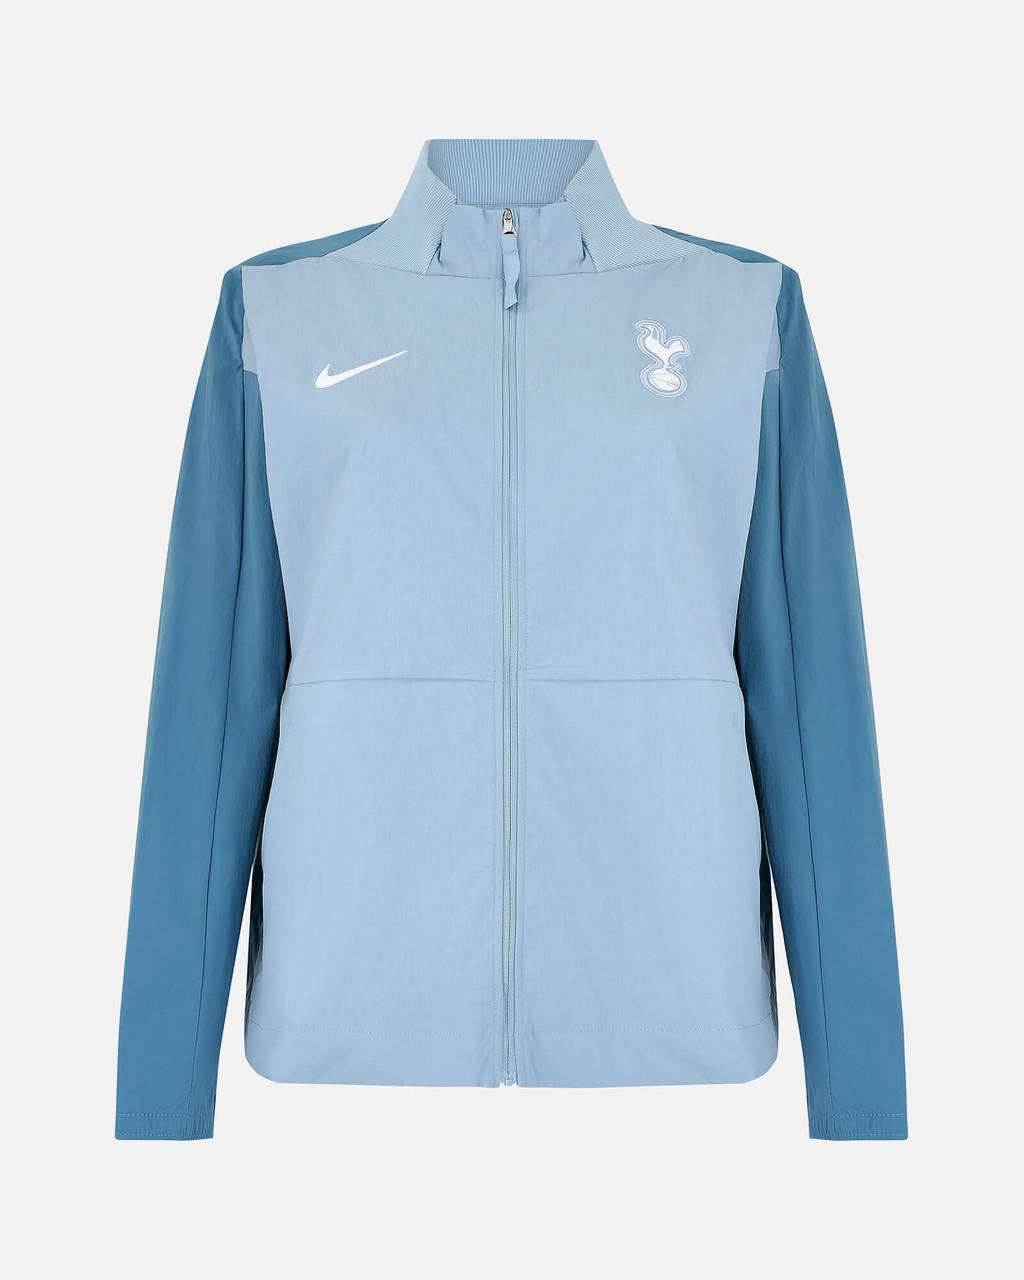 Nike Spurs Nike Womens Blue Anthem Jacket 2022/23 